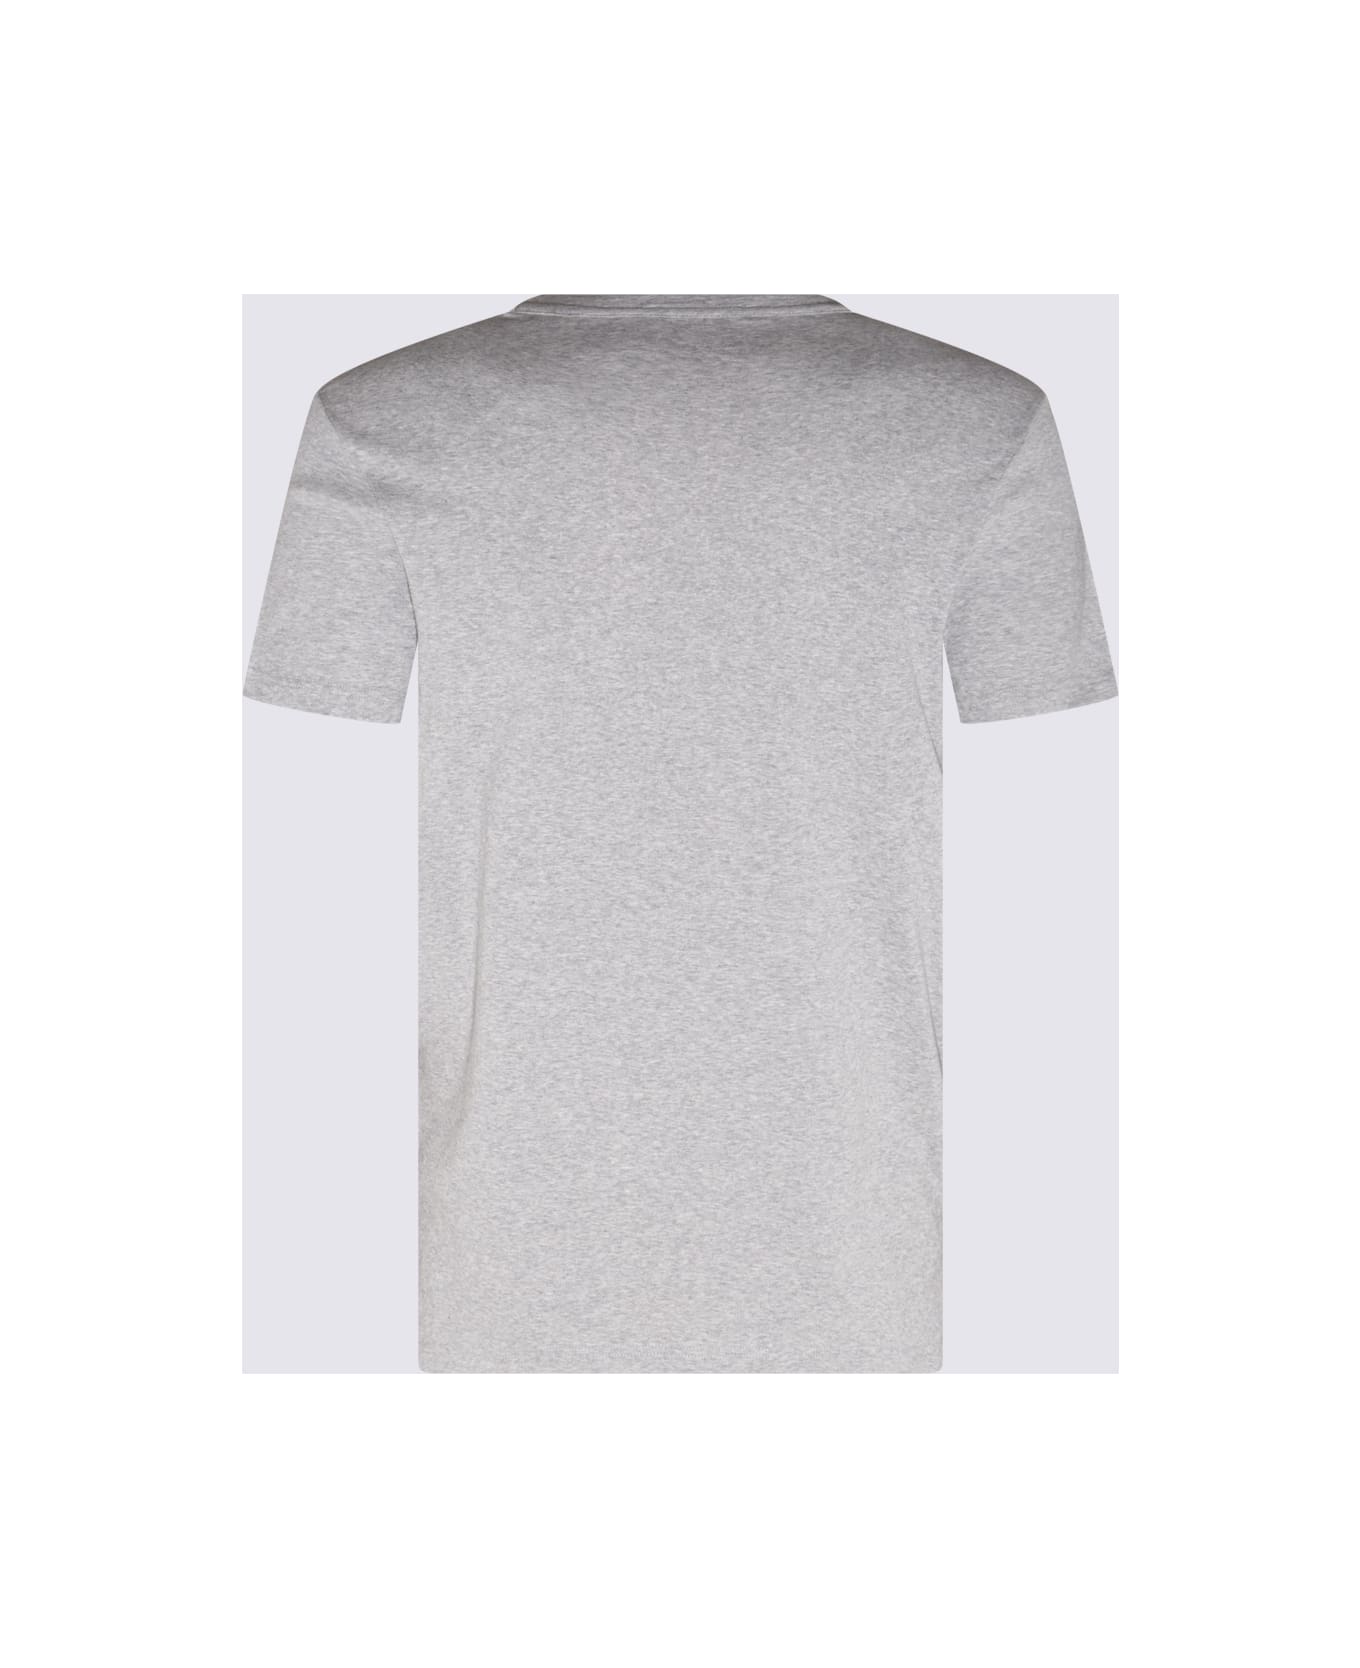 Tom Ford Grey Cotton Blend T-shirt - Grey シャツ